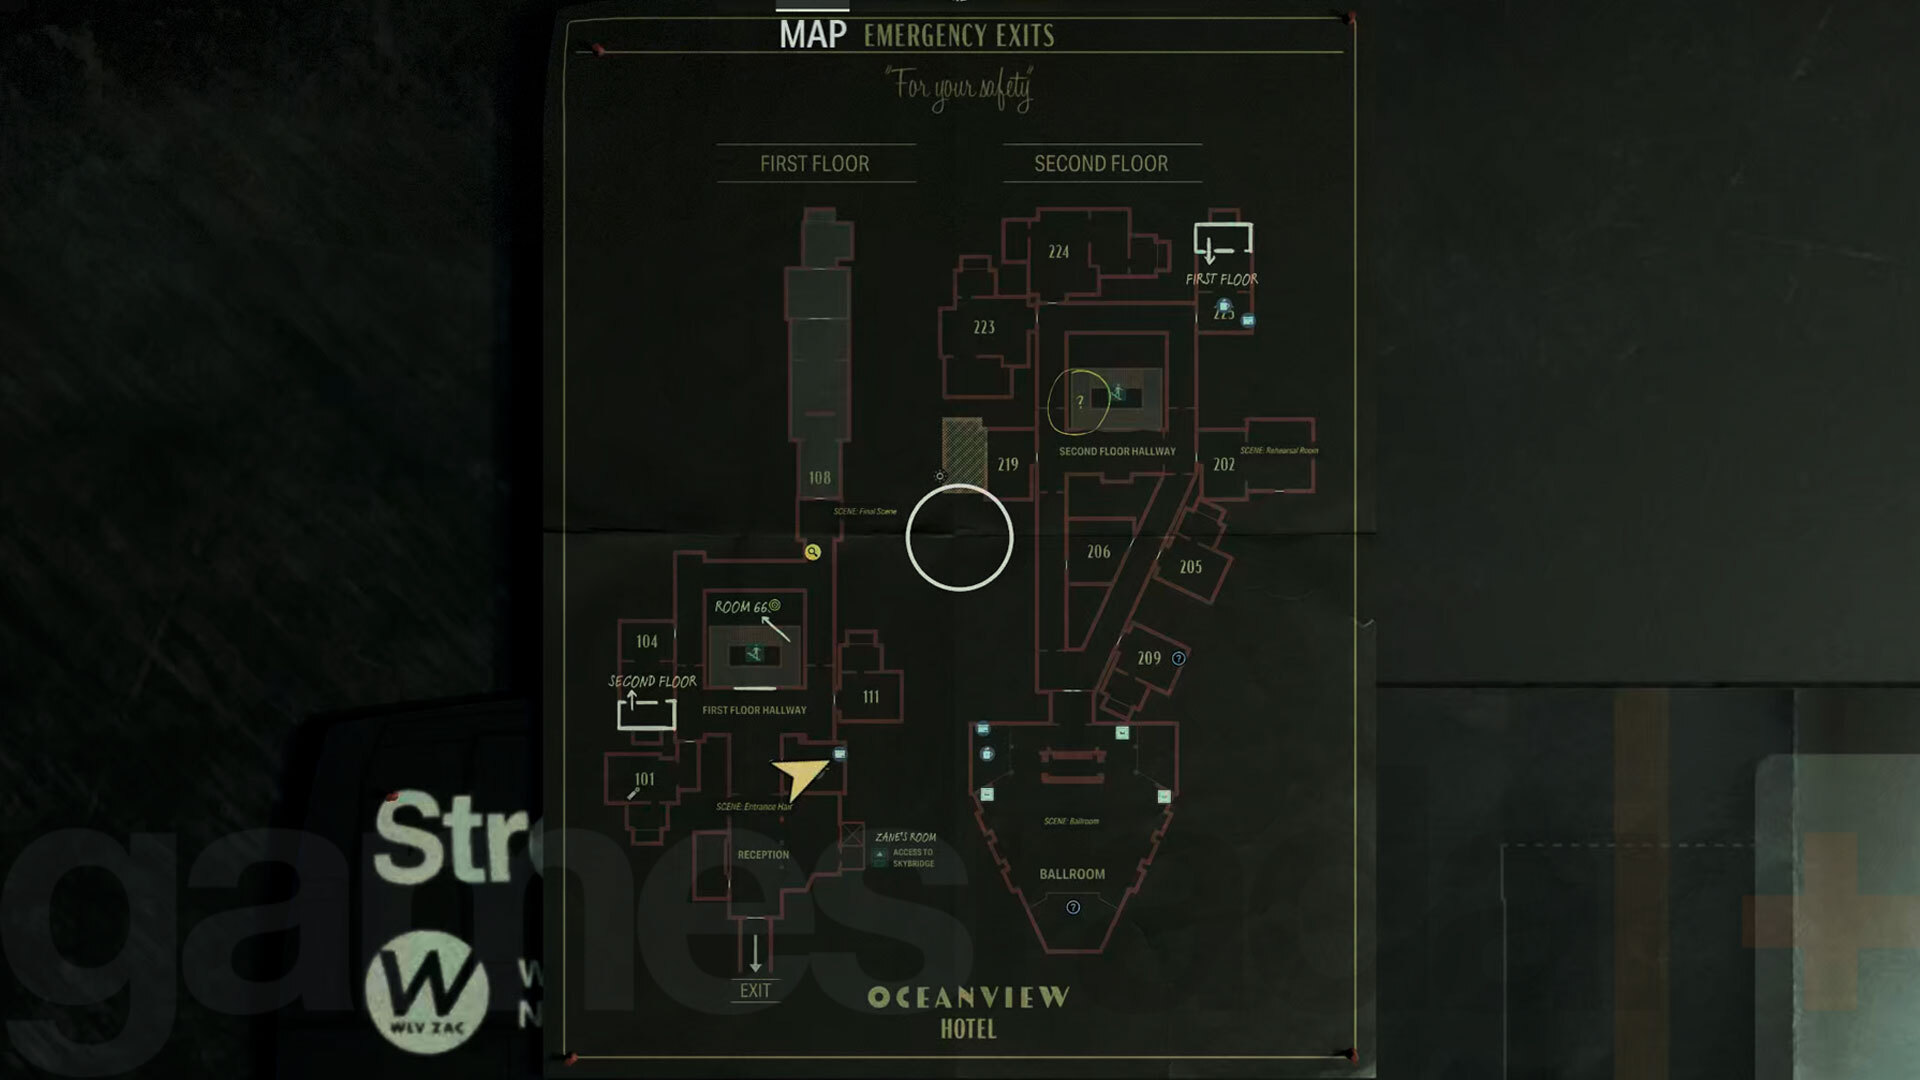 De Oceanview Hotel kaart in Alan Wake 2